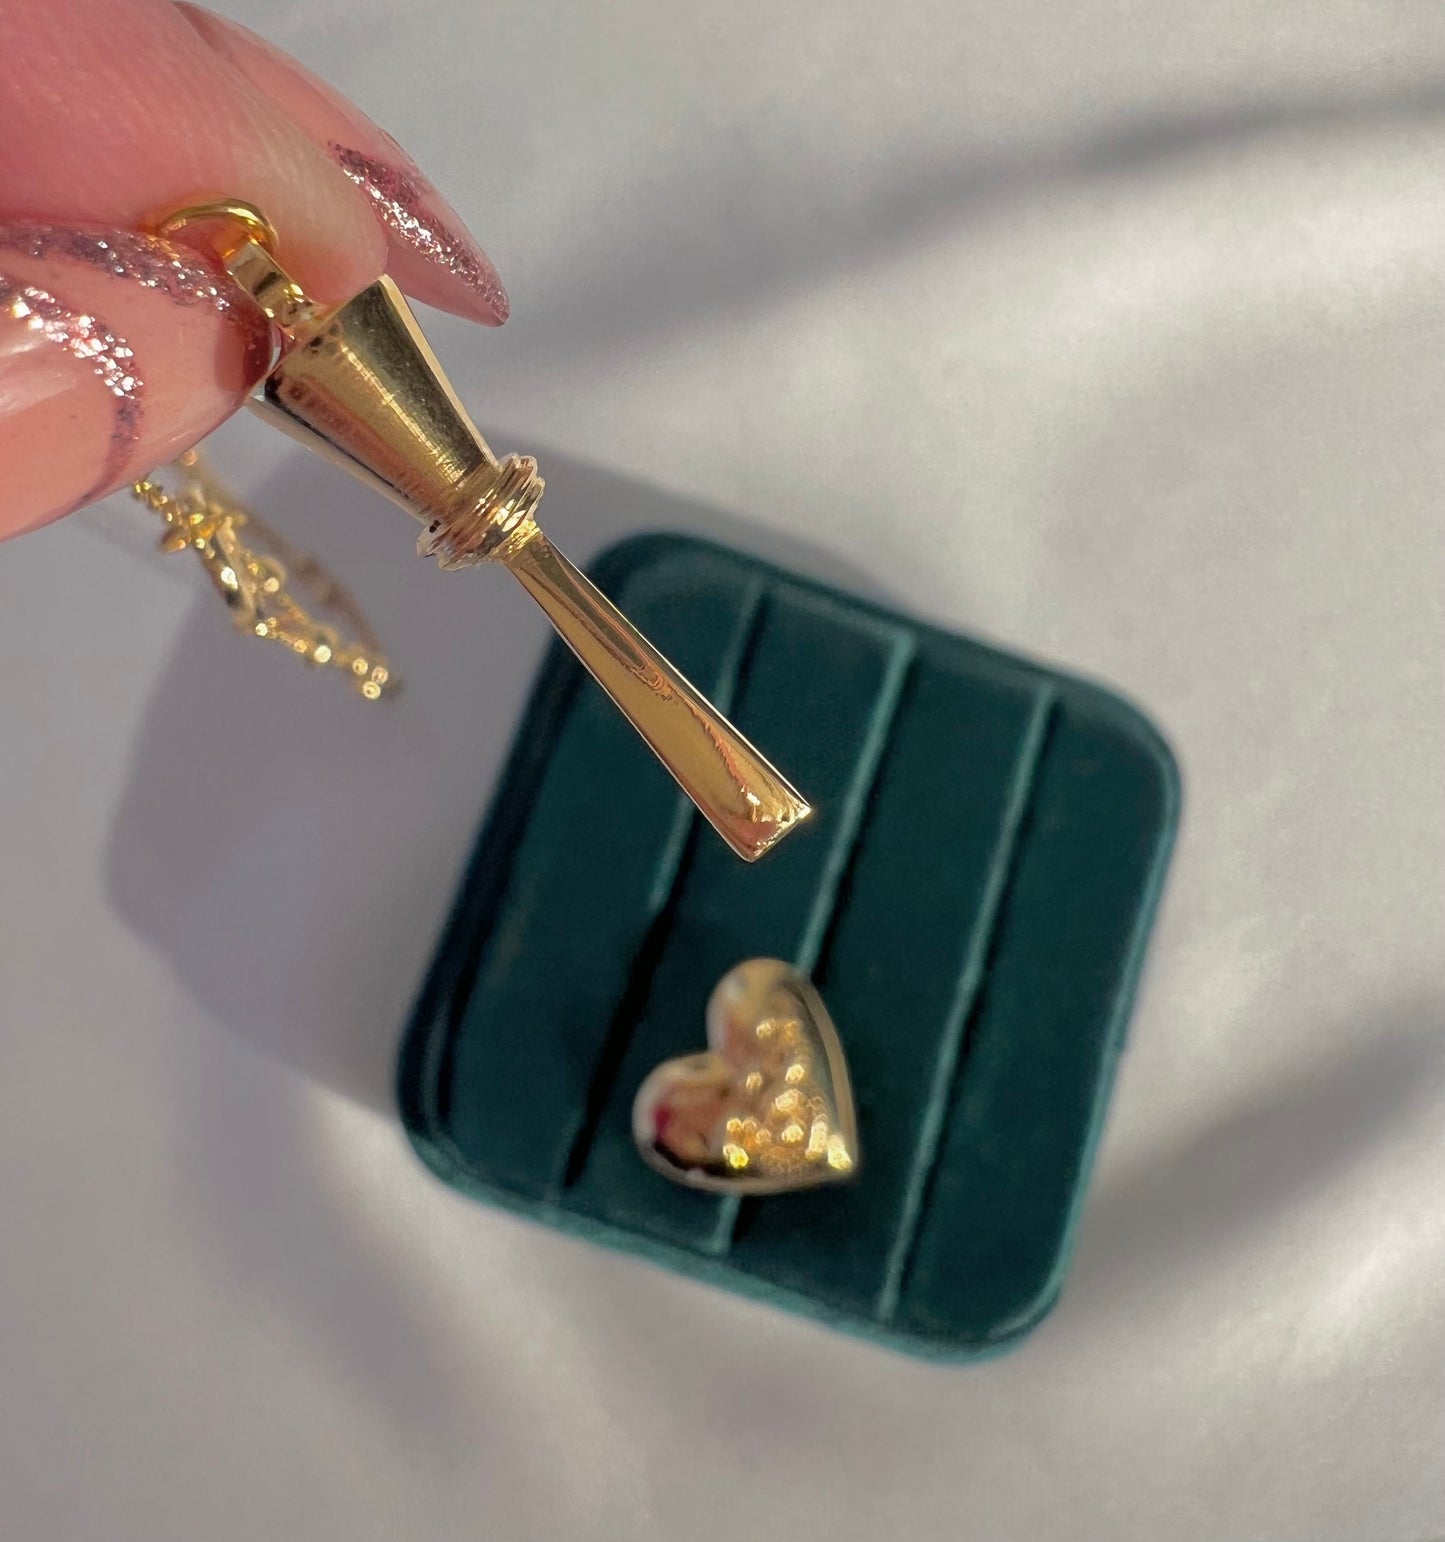 LDR style v.2 - Rosary Emerald Heart Necklace - Lana Dupe Necklace - Harry Styles - LDR Necklace